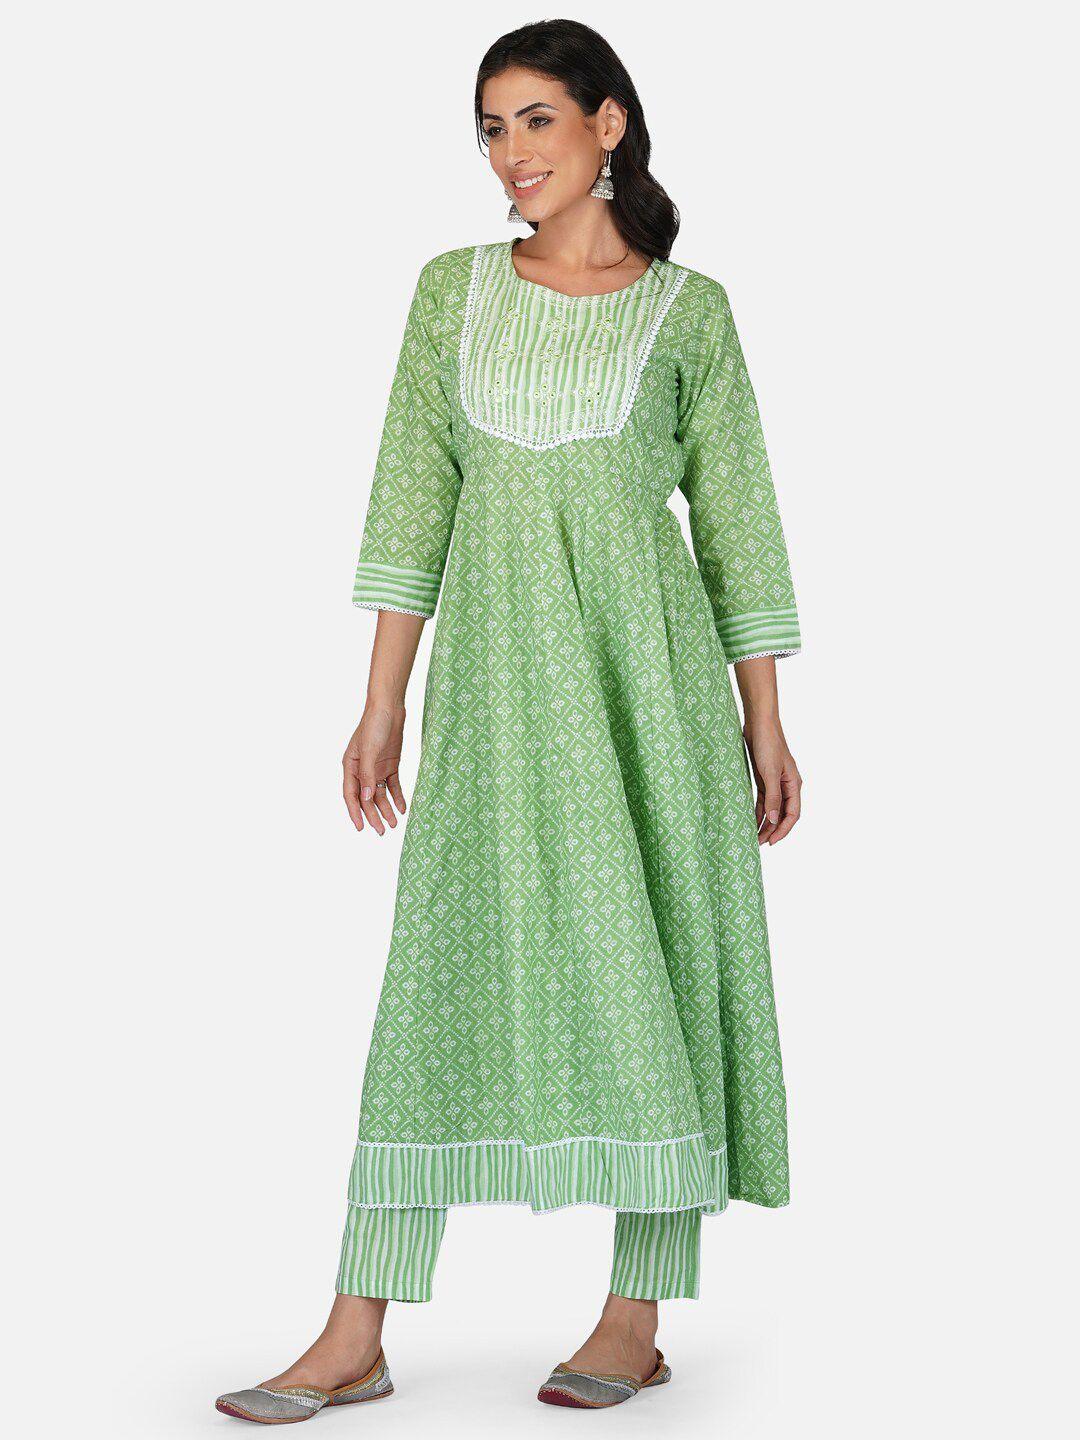 aarti fashion green & white ethnic motifs printed pure cotton anarkali kurti